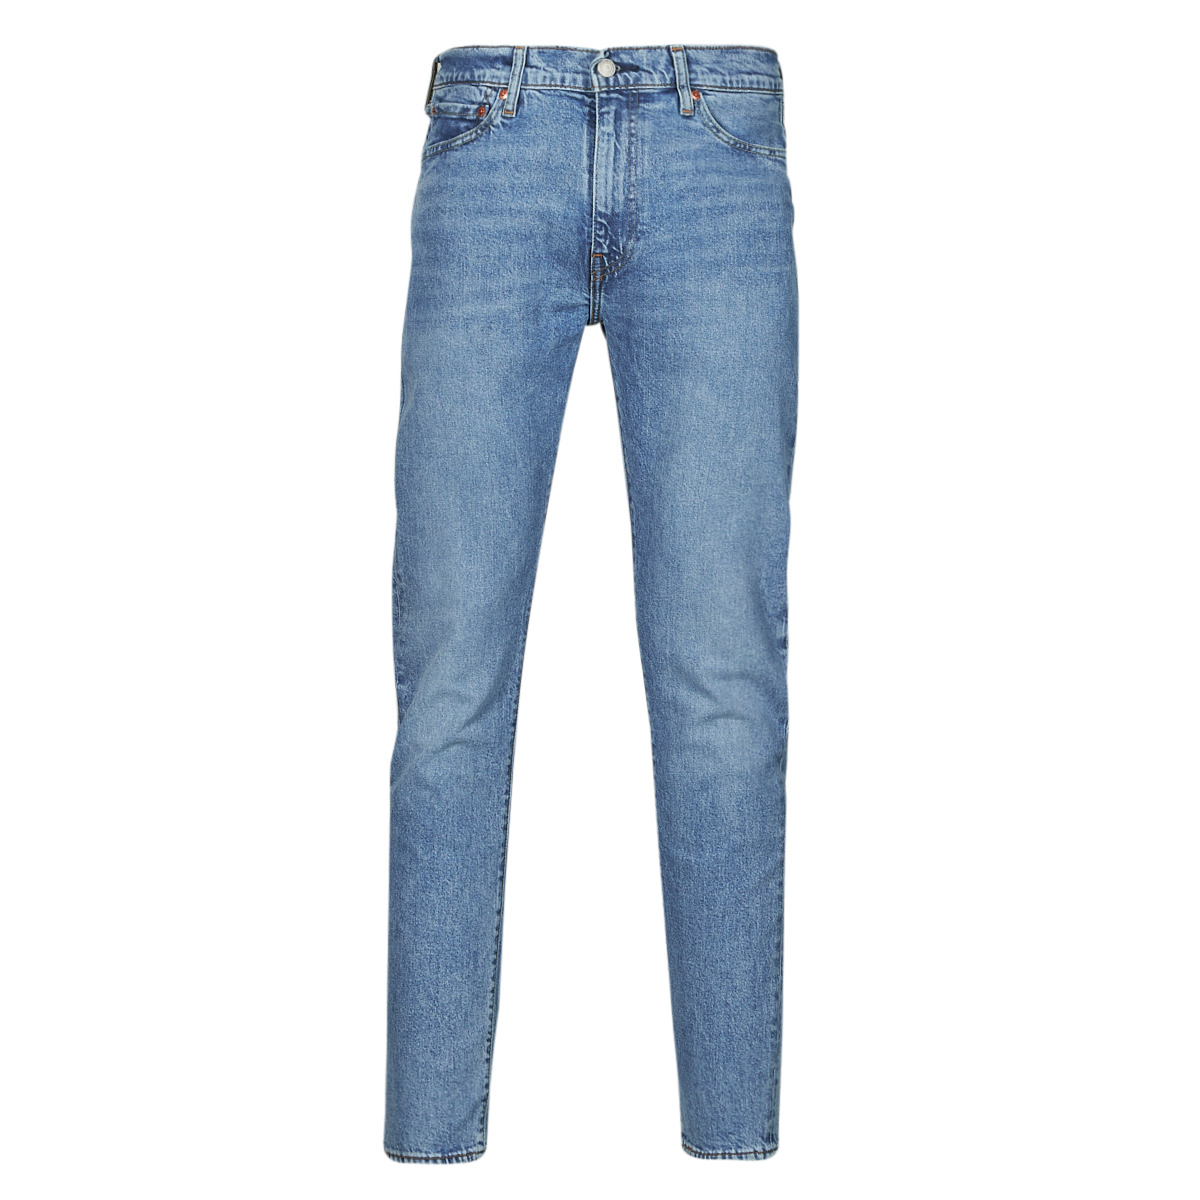 textil Herre Jeans - skinny Levi's 510 SKINNY Blå